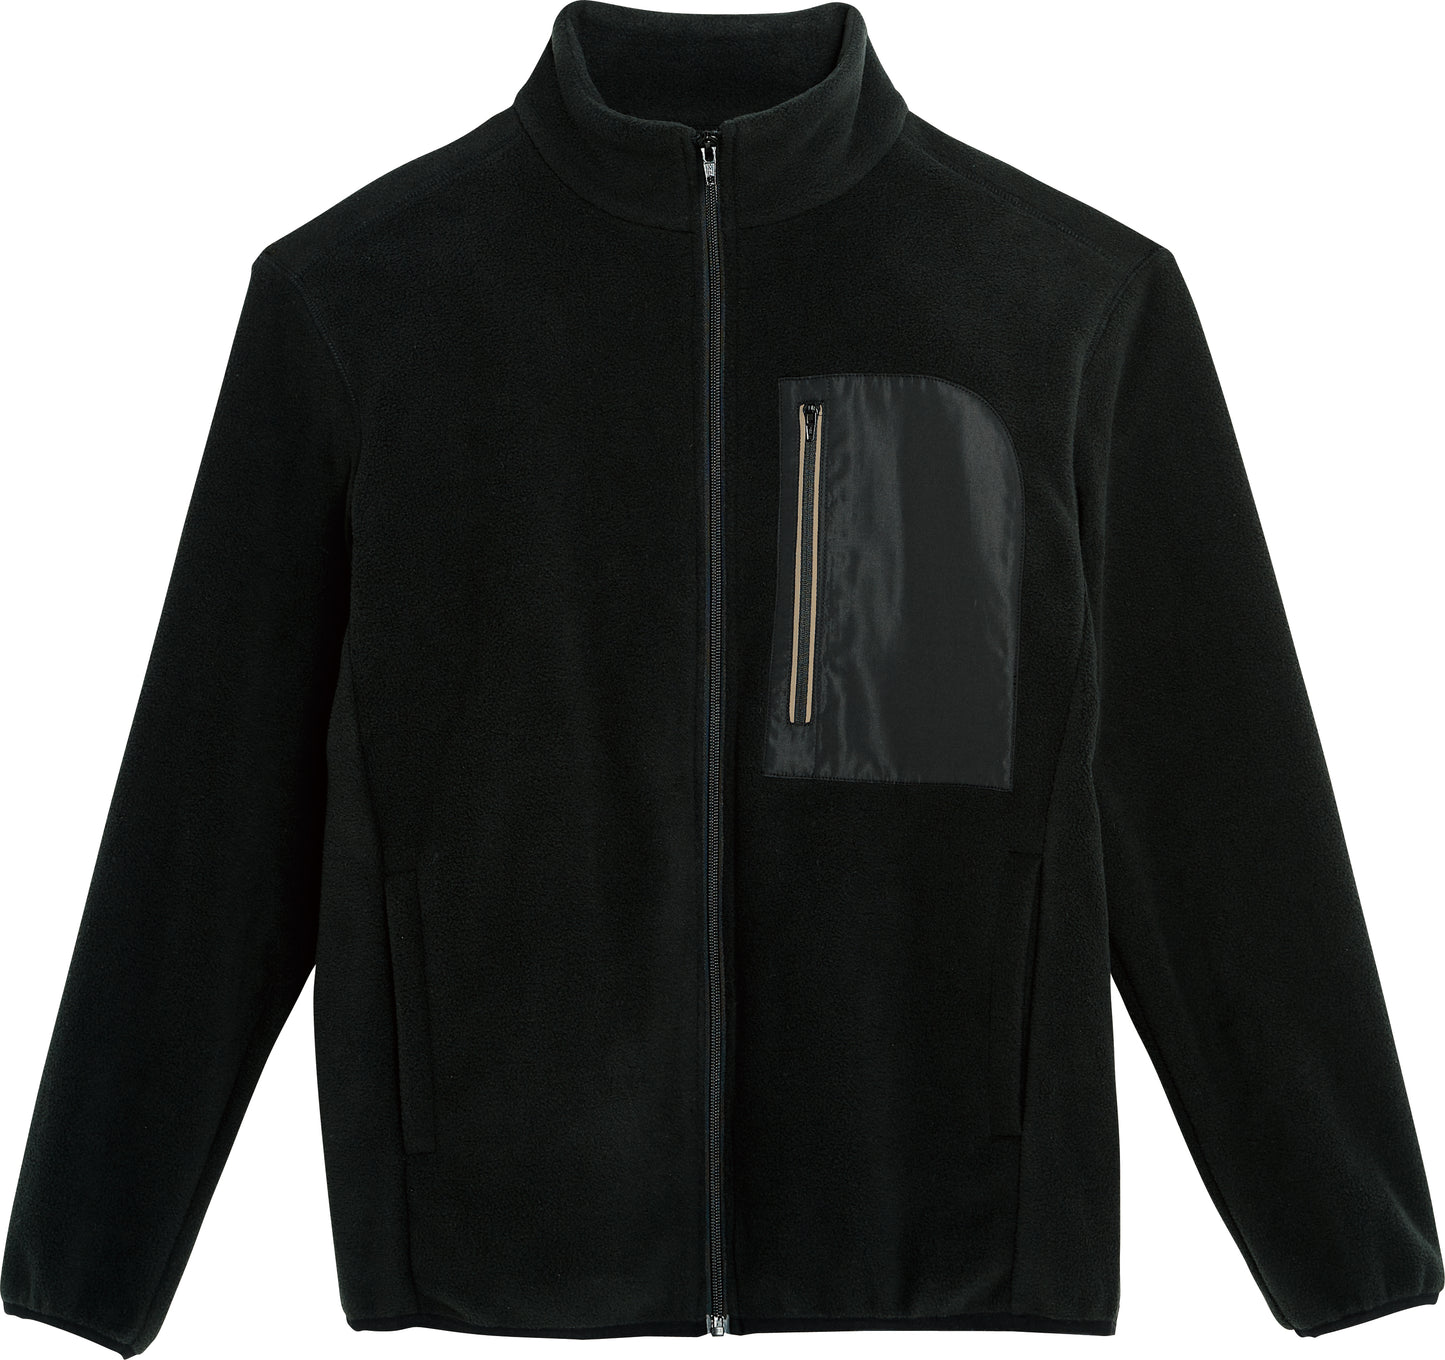 [Plus-1] 238-RFJ RFJ Reflective Fleece Jacket